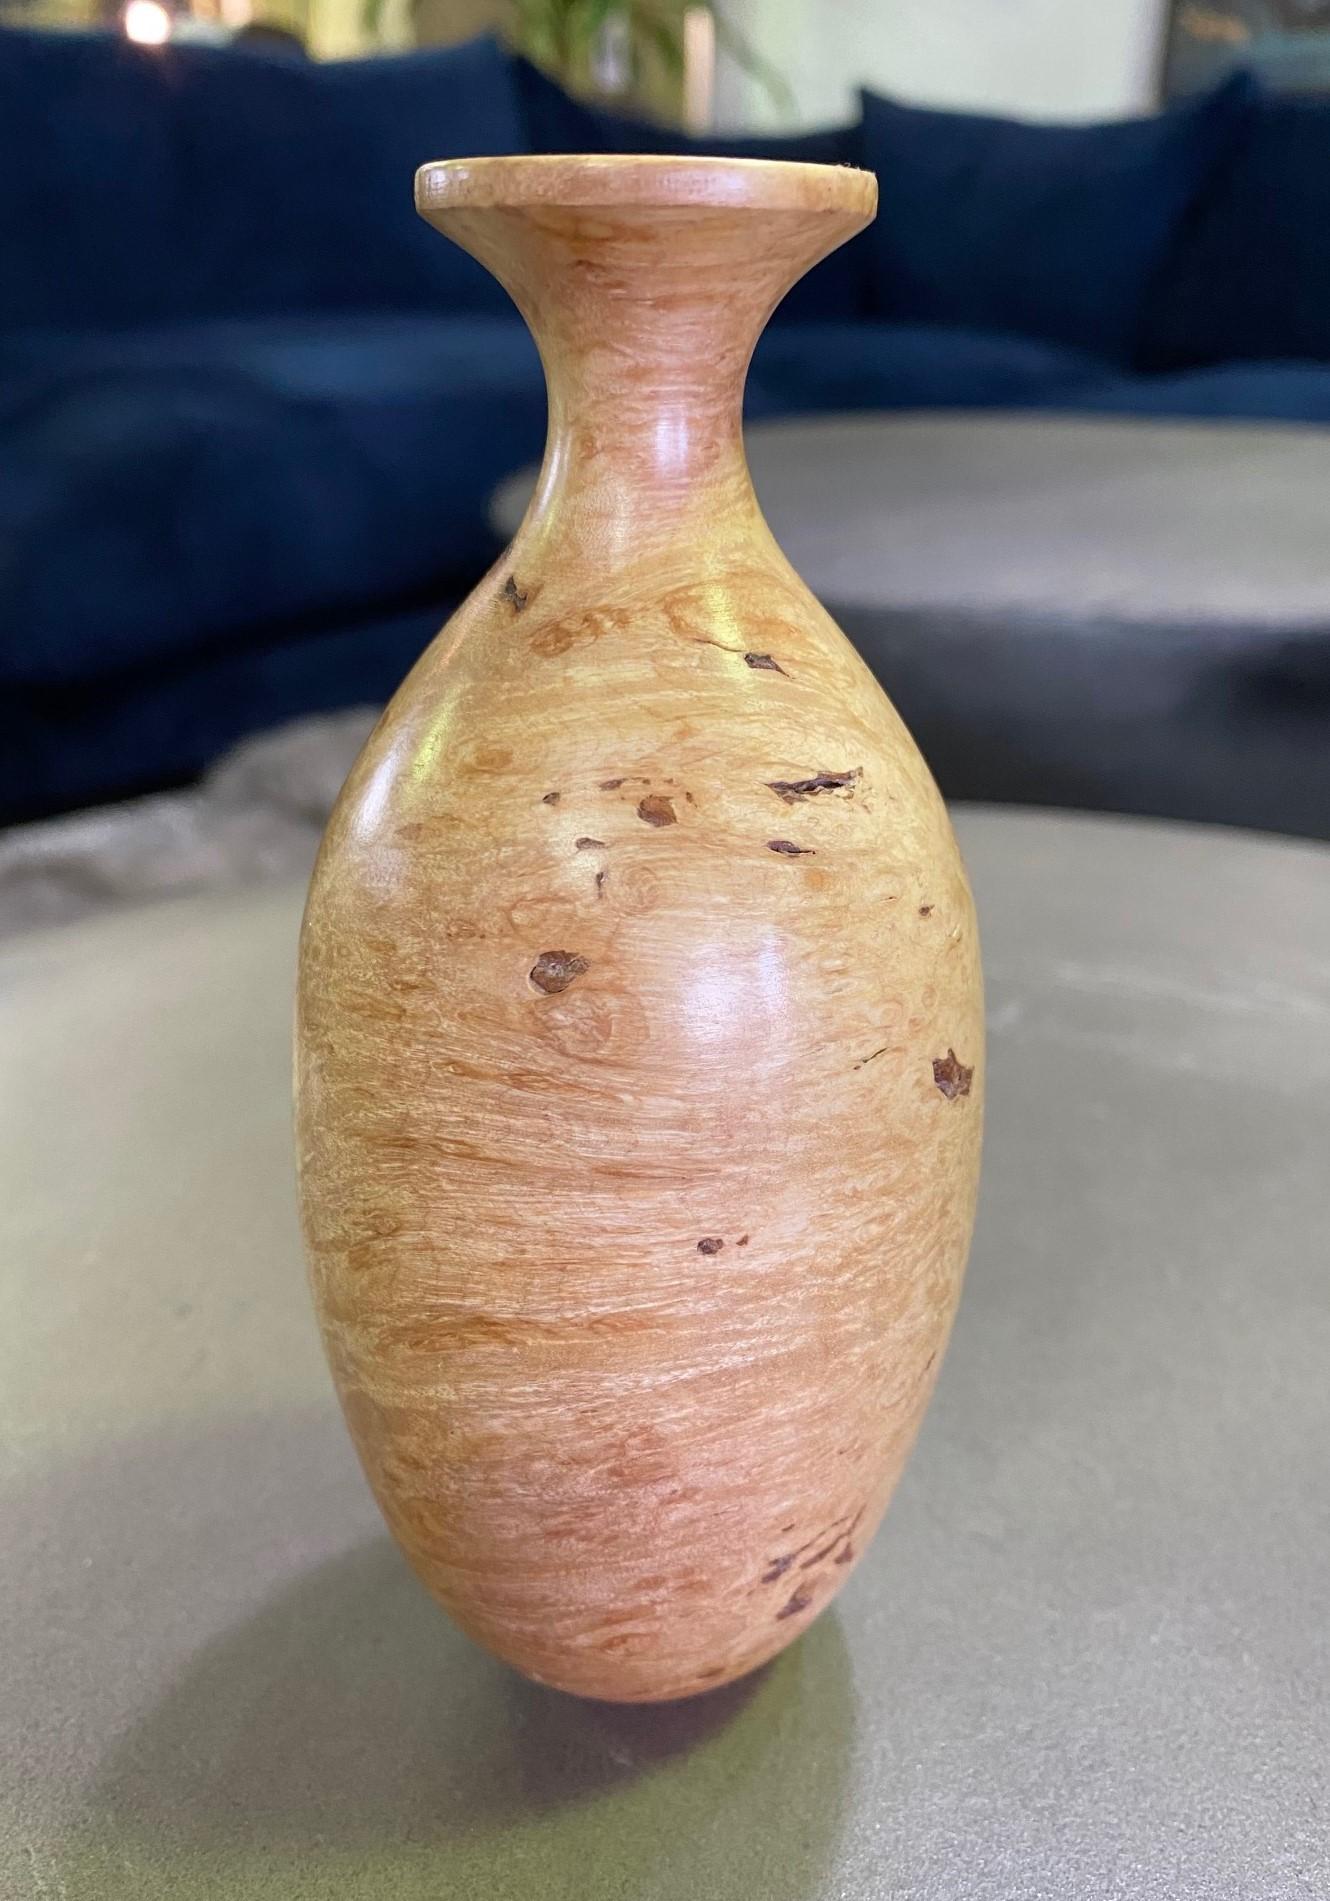 wood turned vases for sale